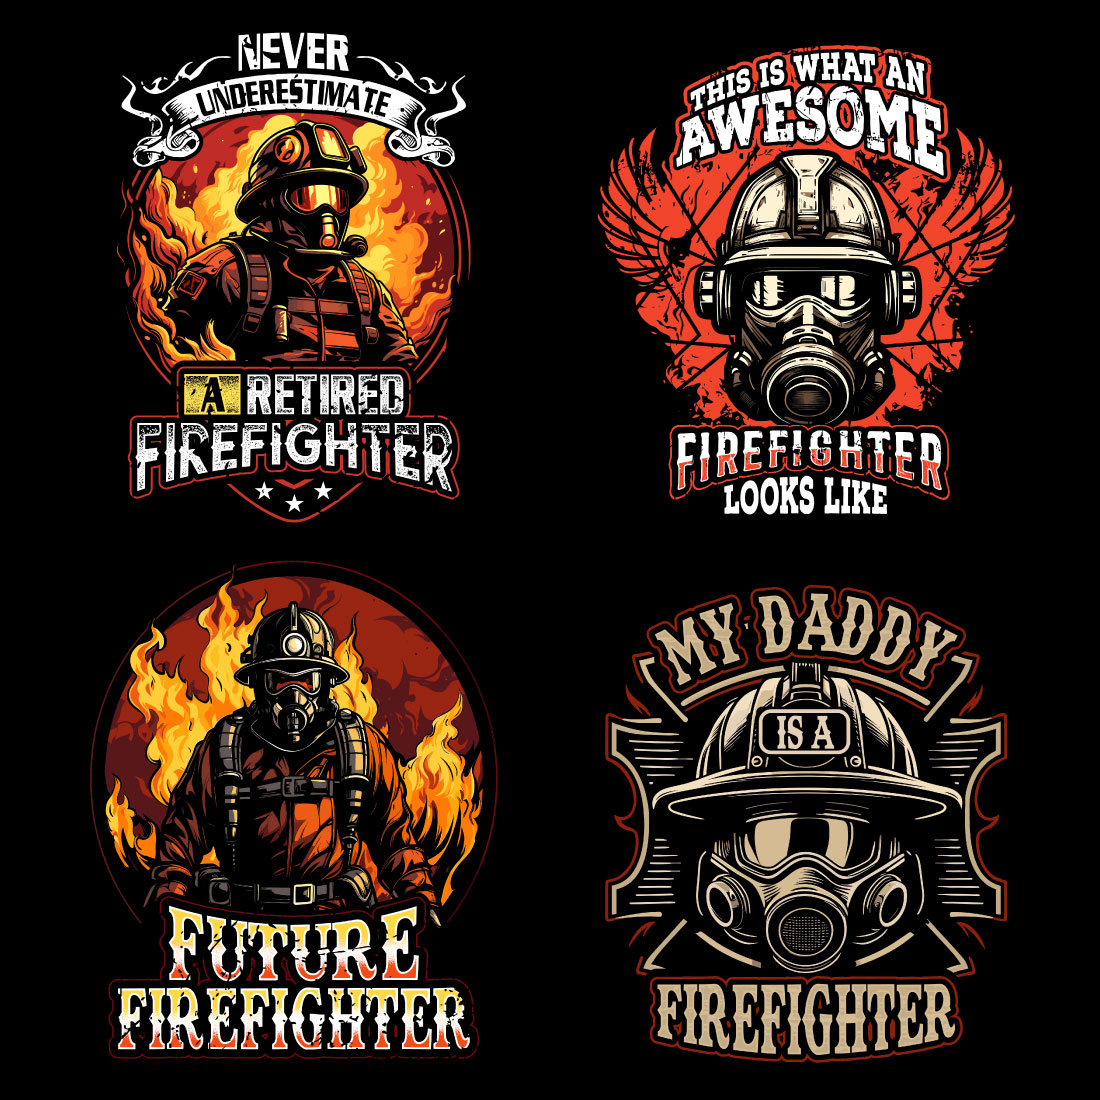 Firefighter t shirt design cover image.